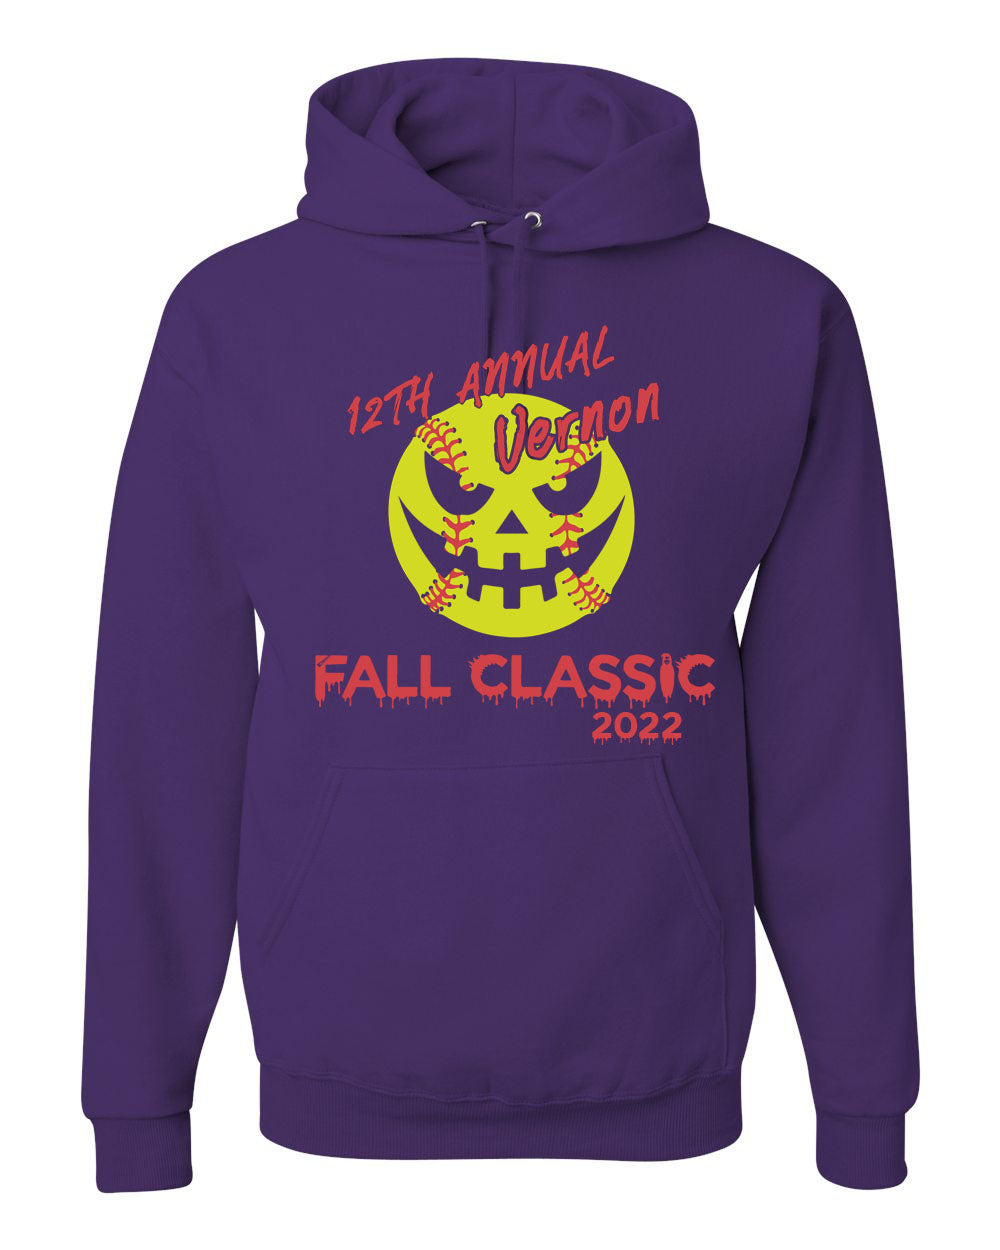 Fall classic 2022 Hooded Sweatshirt